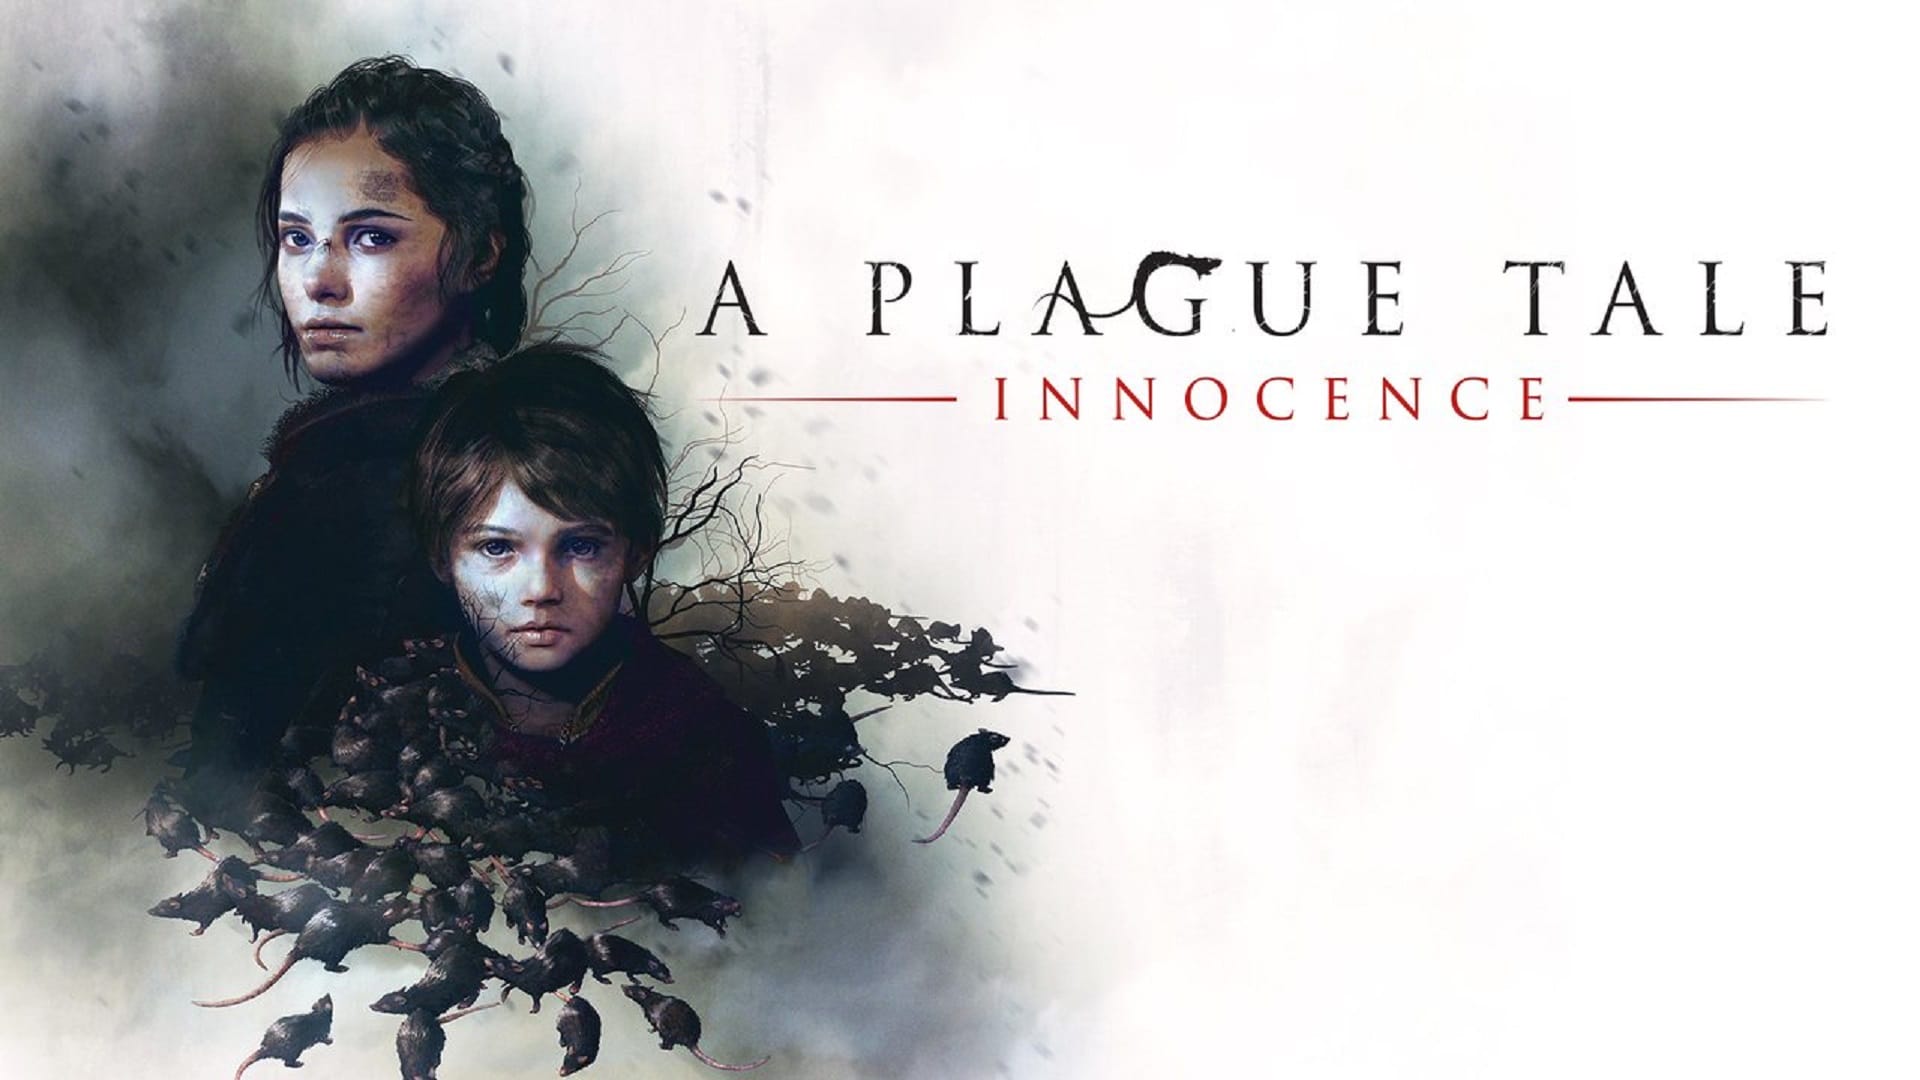 A Plague Tale: Innocence PS4 Pro Review